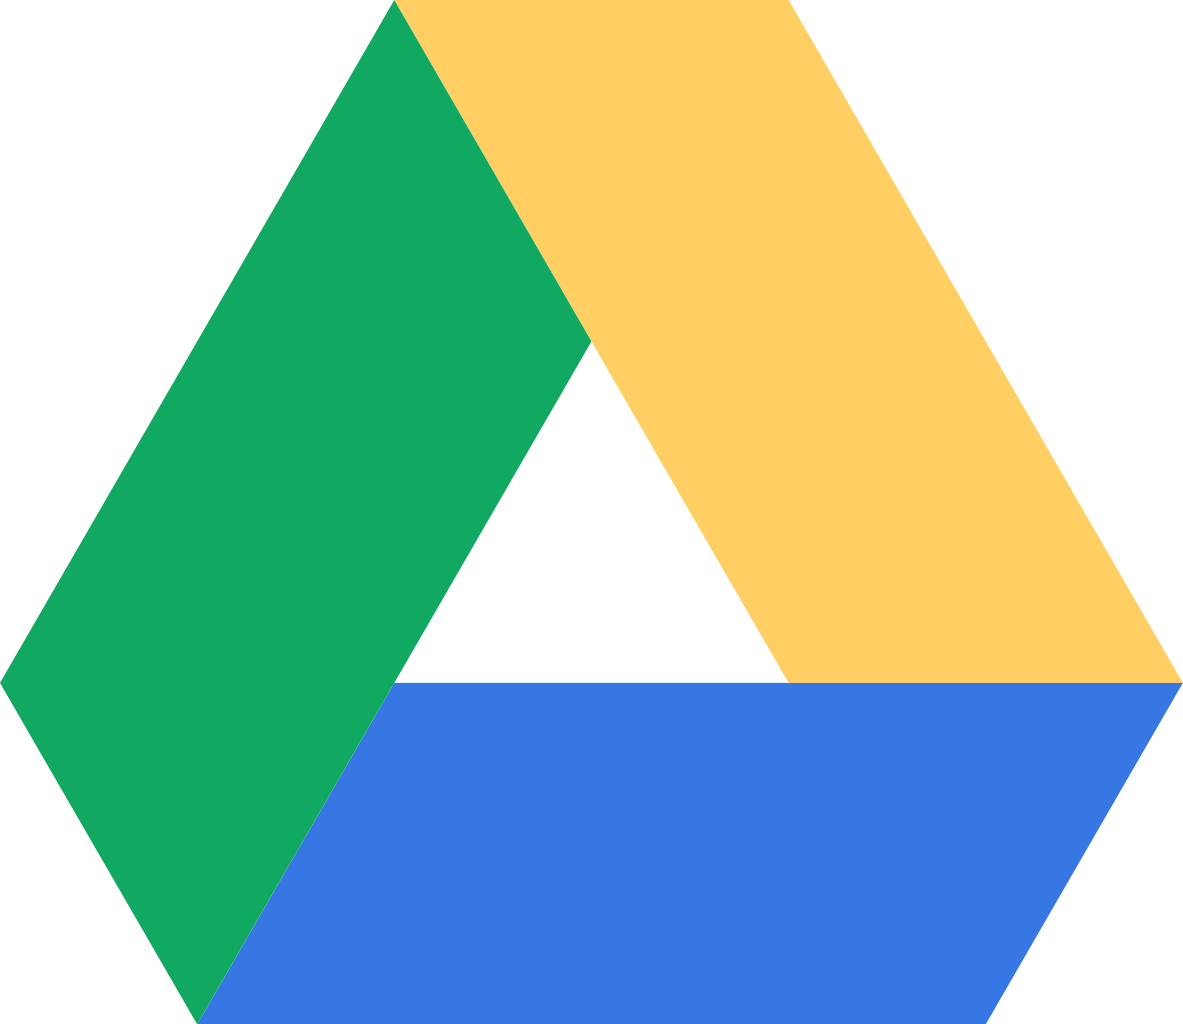 Google Drive logo